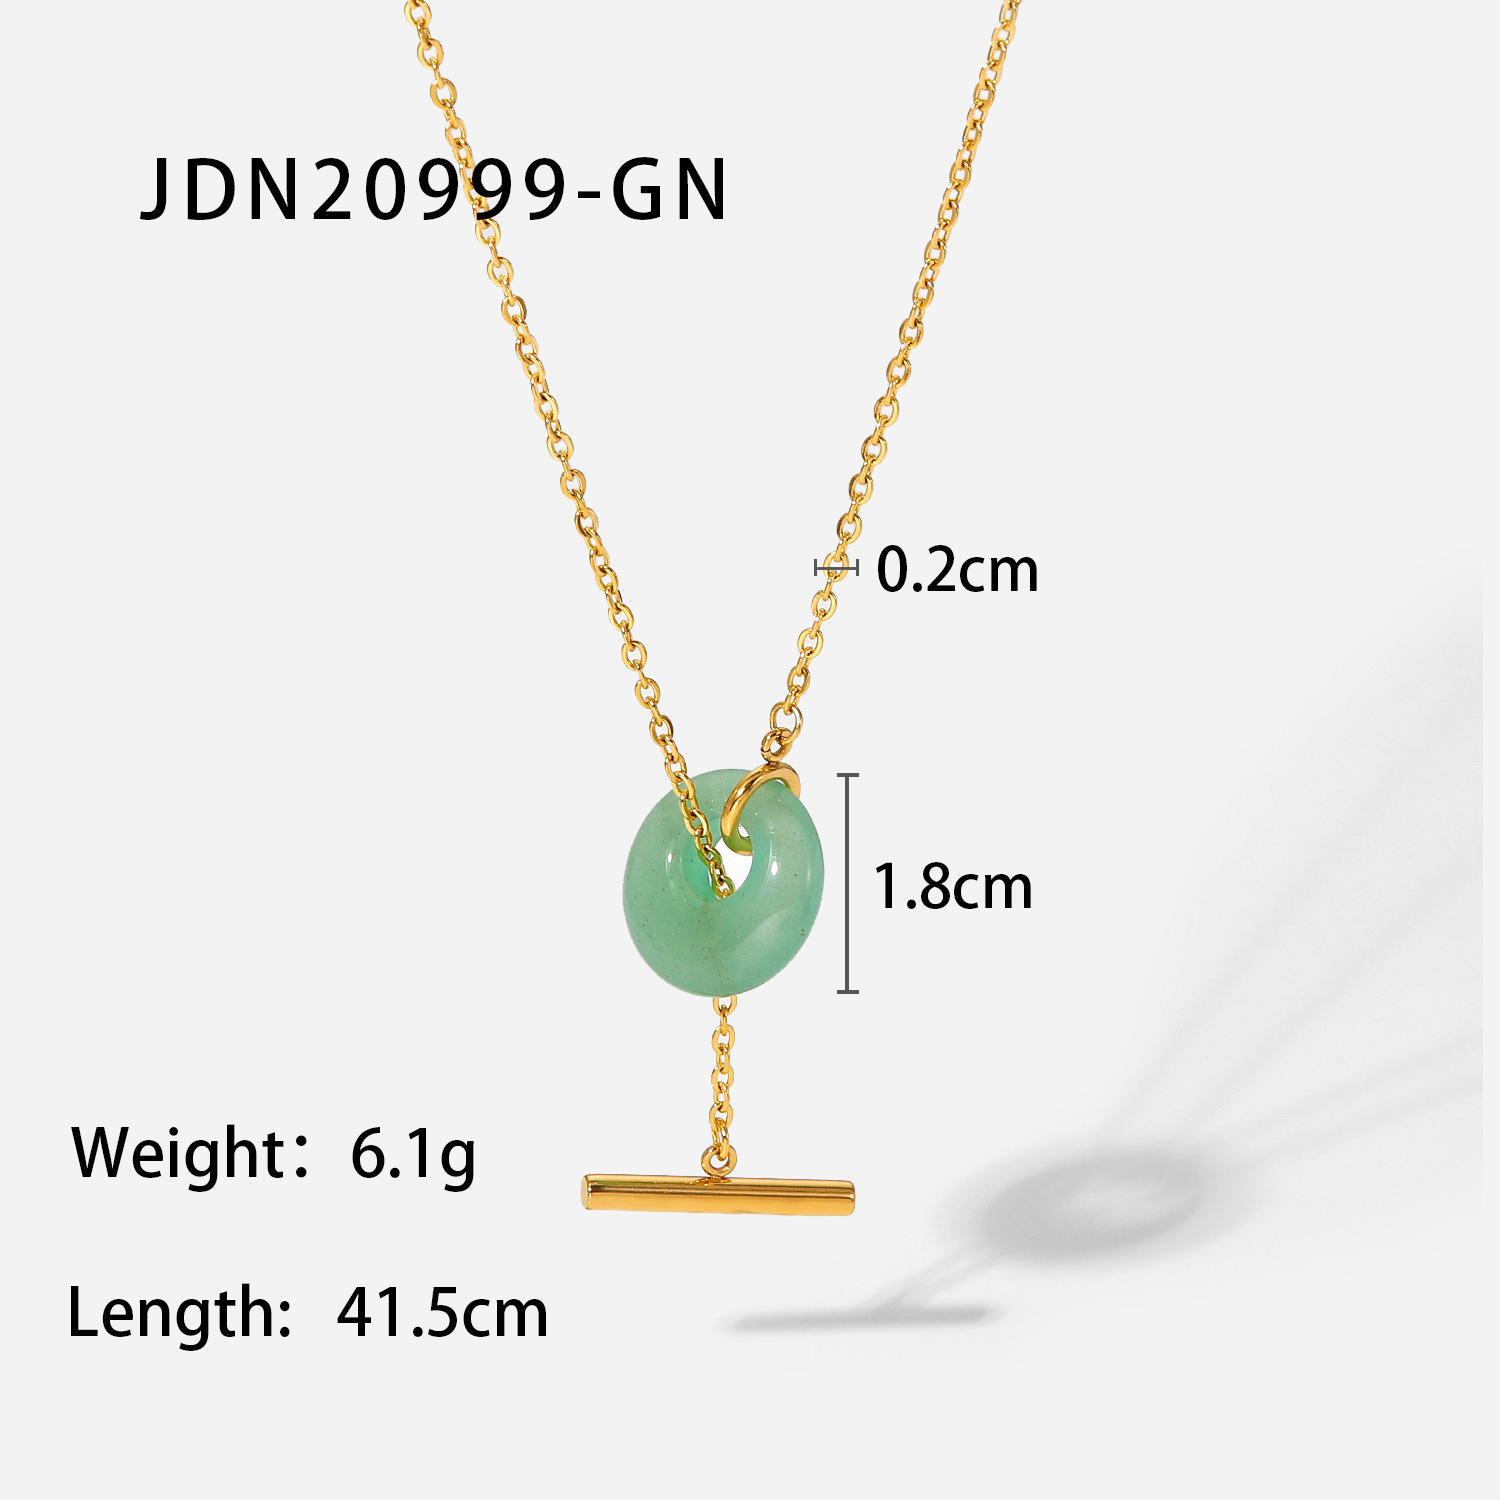 1:JDN20999-GN